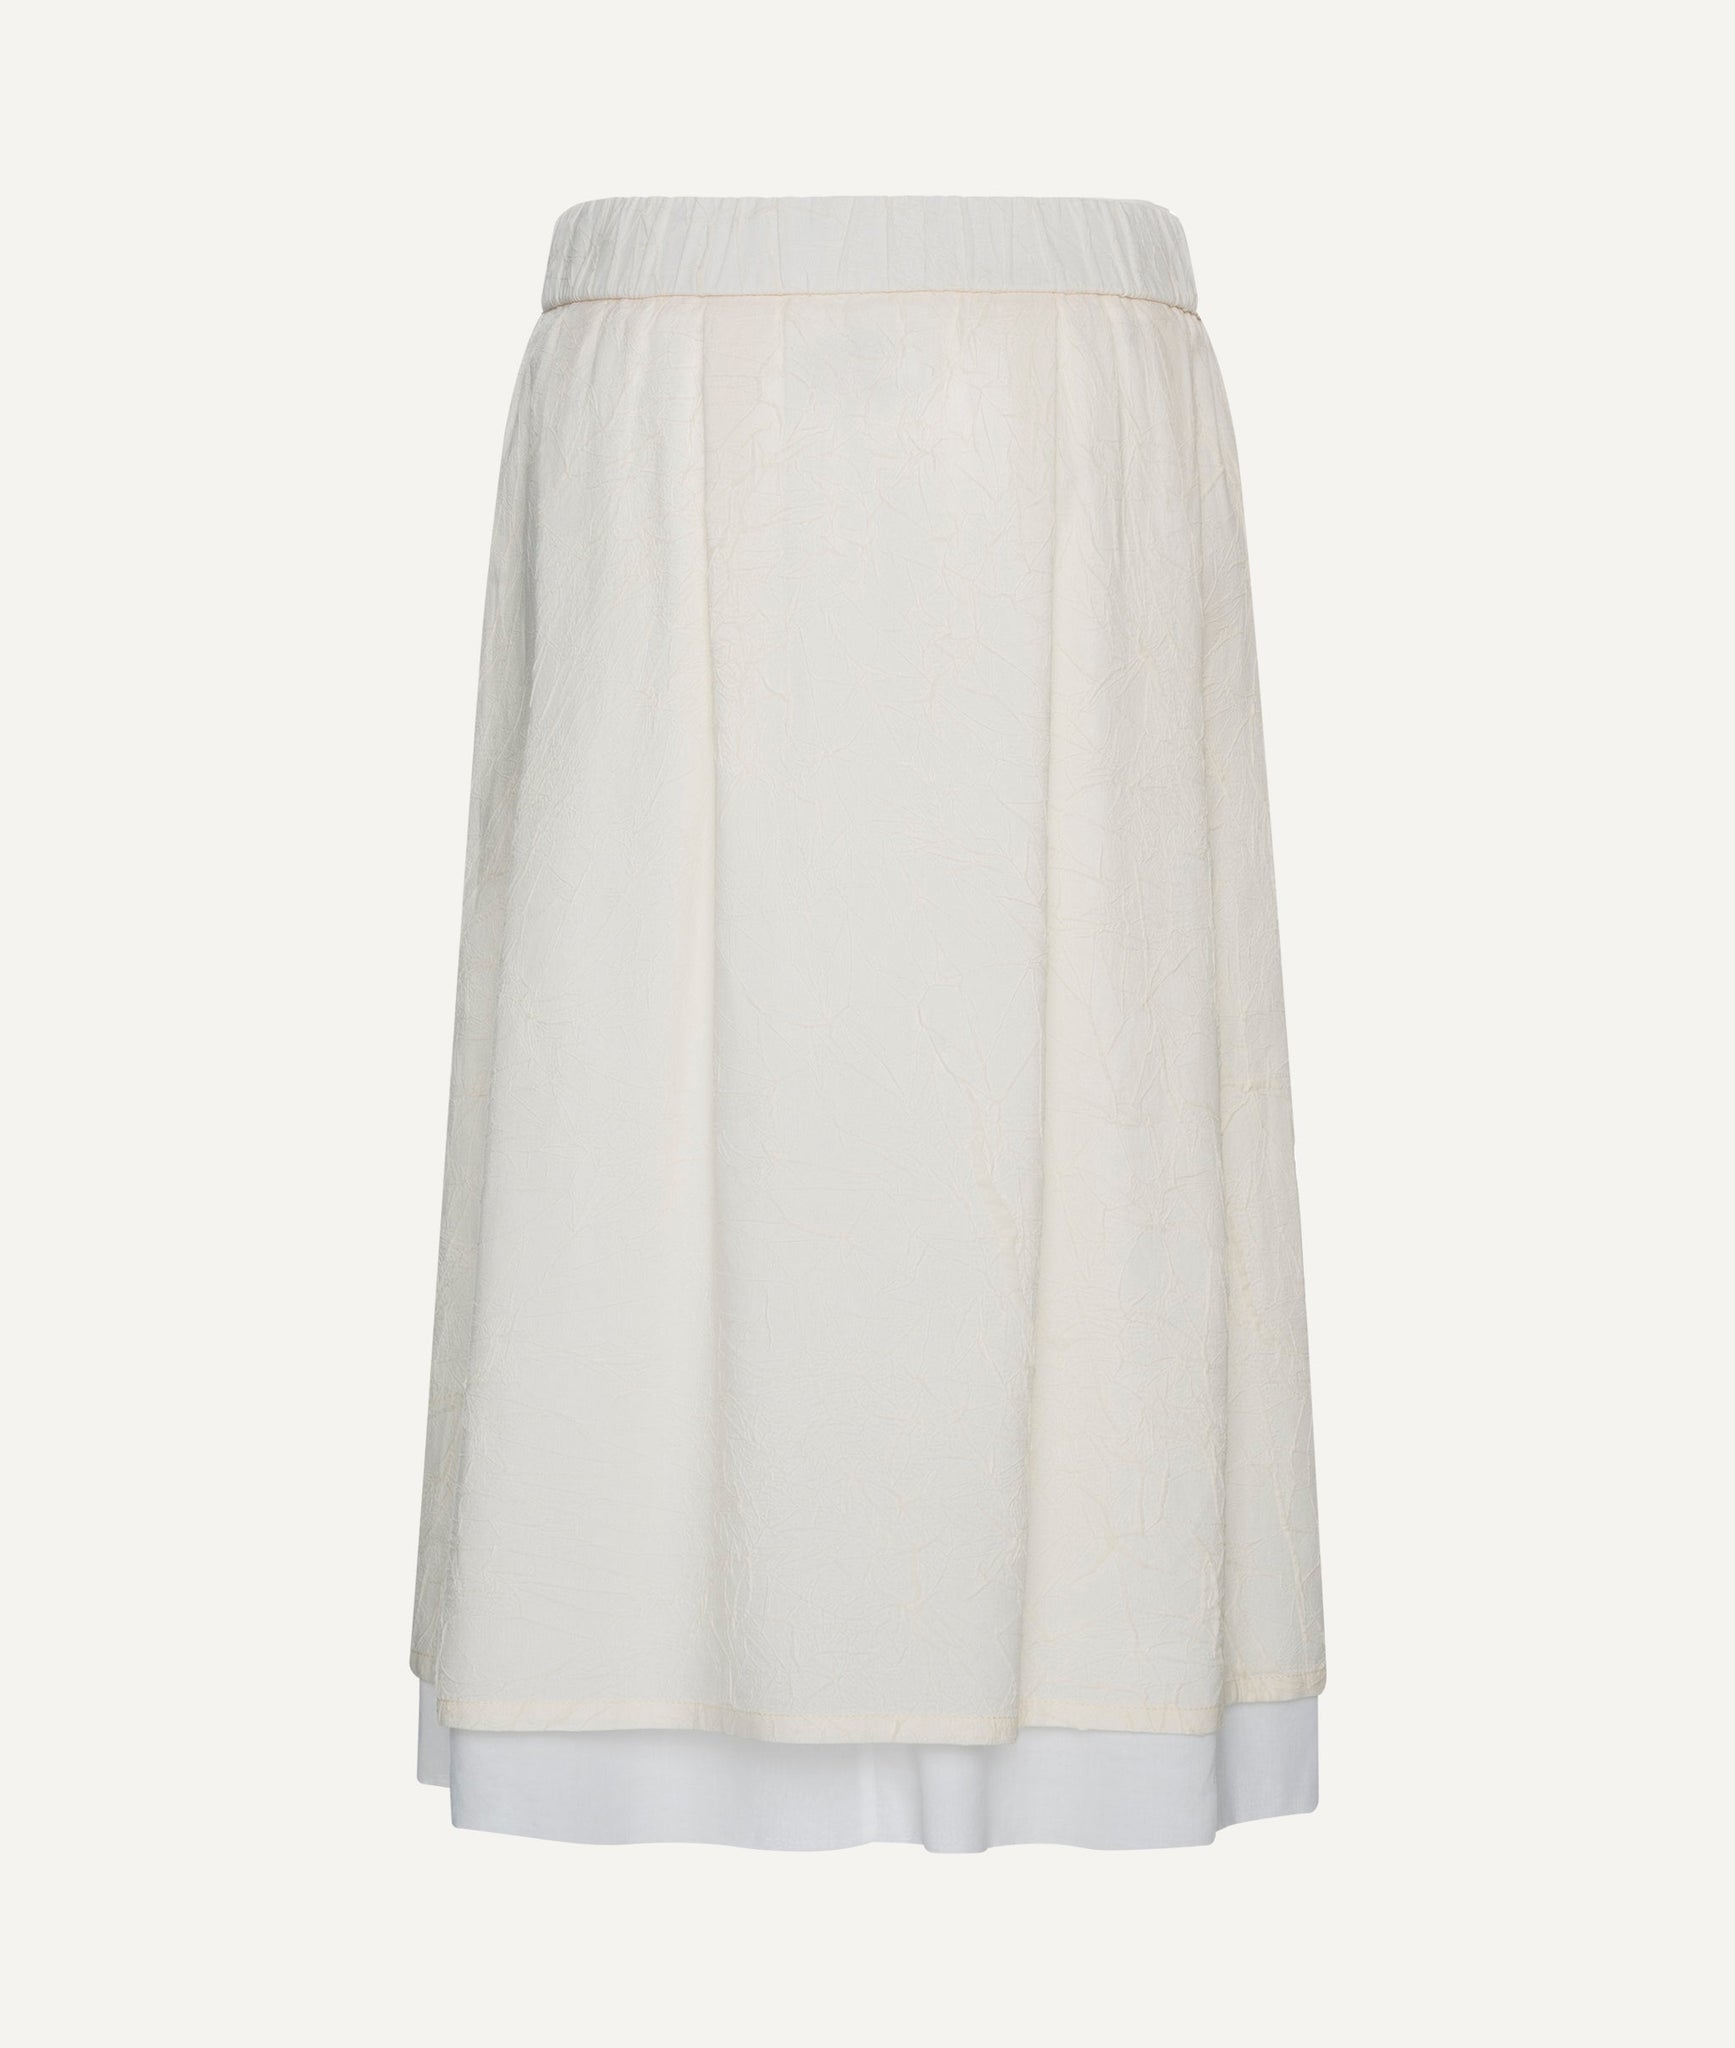 Peserico - Skirt in Cotton